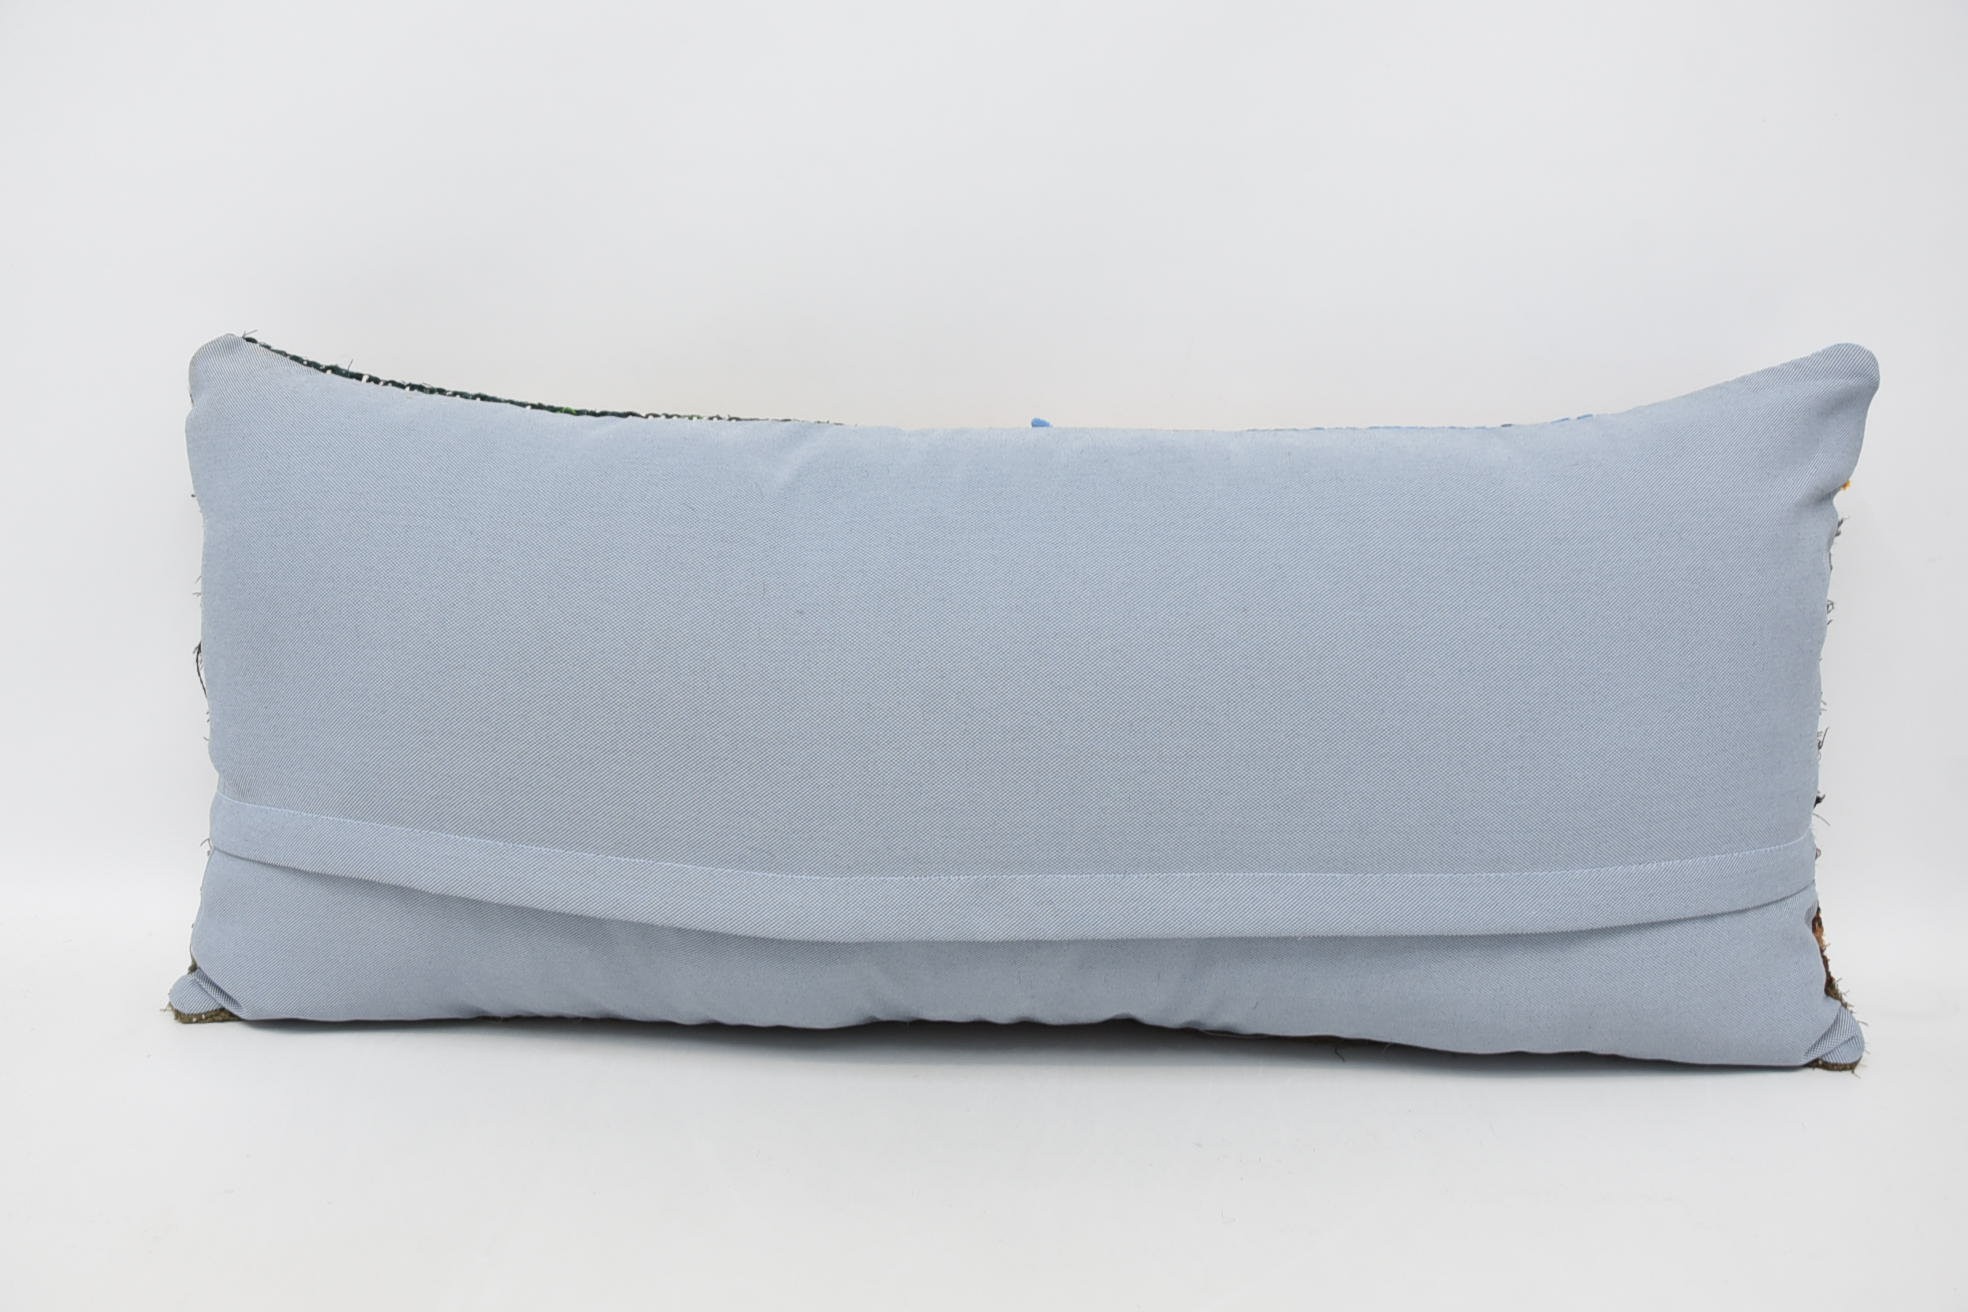 Vintage Pillow, 16"x36" Brown Cushion Case, Boho Pillow Sham Cover, Pillow for Sofa, Wool Kilim Pillow Pillow Case